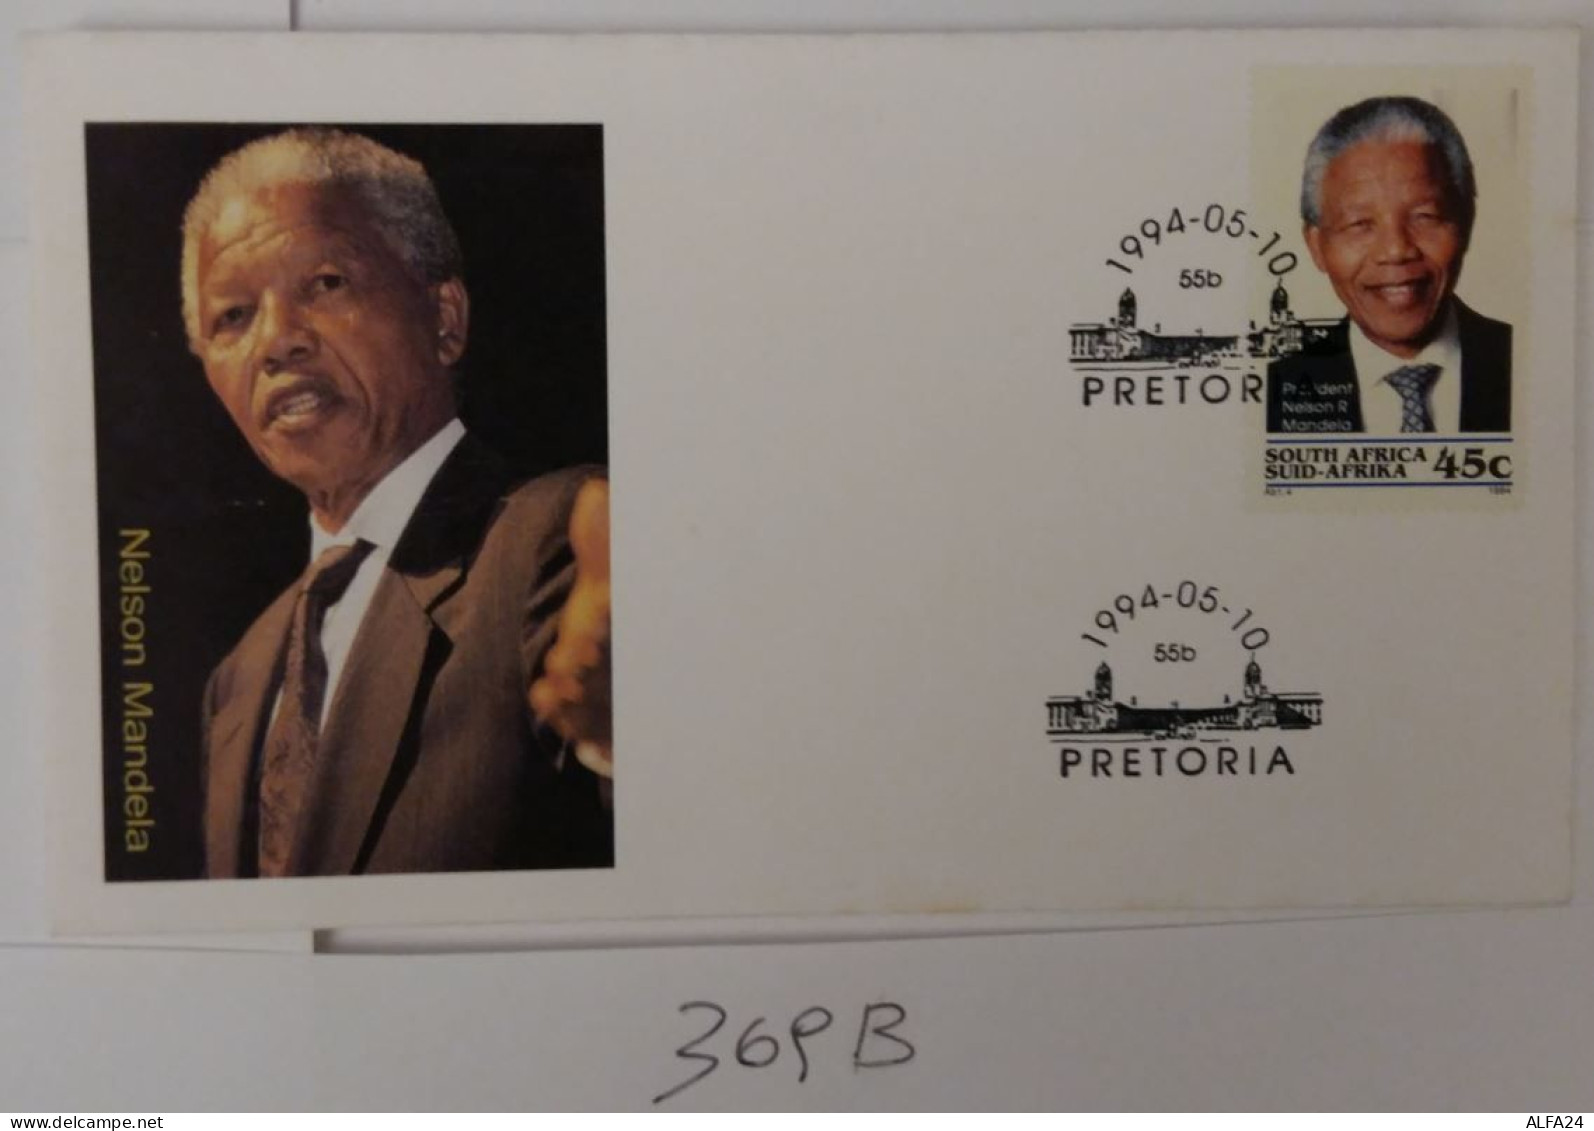 FDC SUD.AFRICA PRETORIA NELSON MANDELA 1994 (369B - FDC